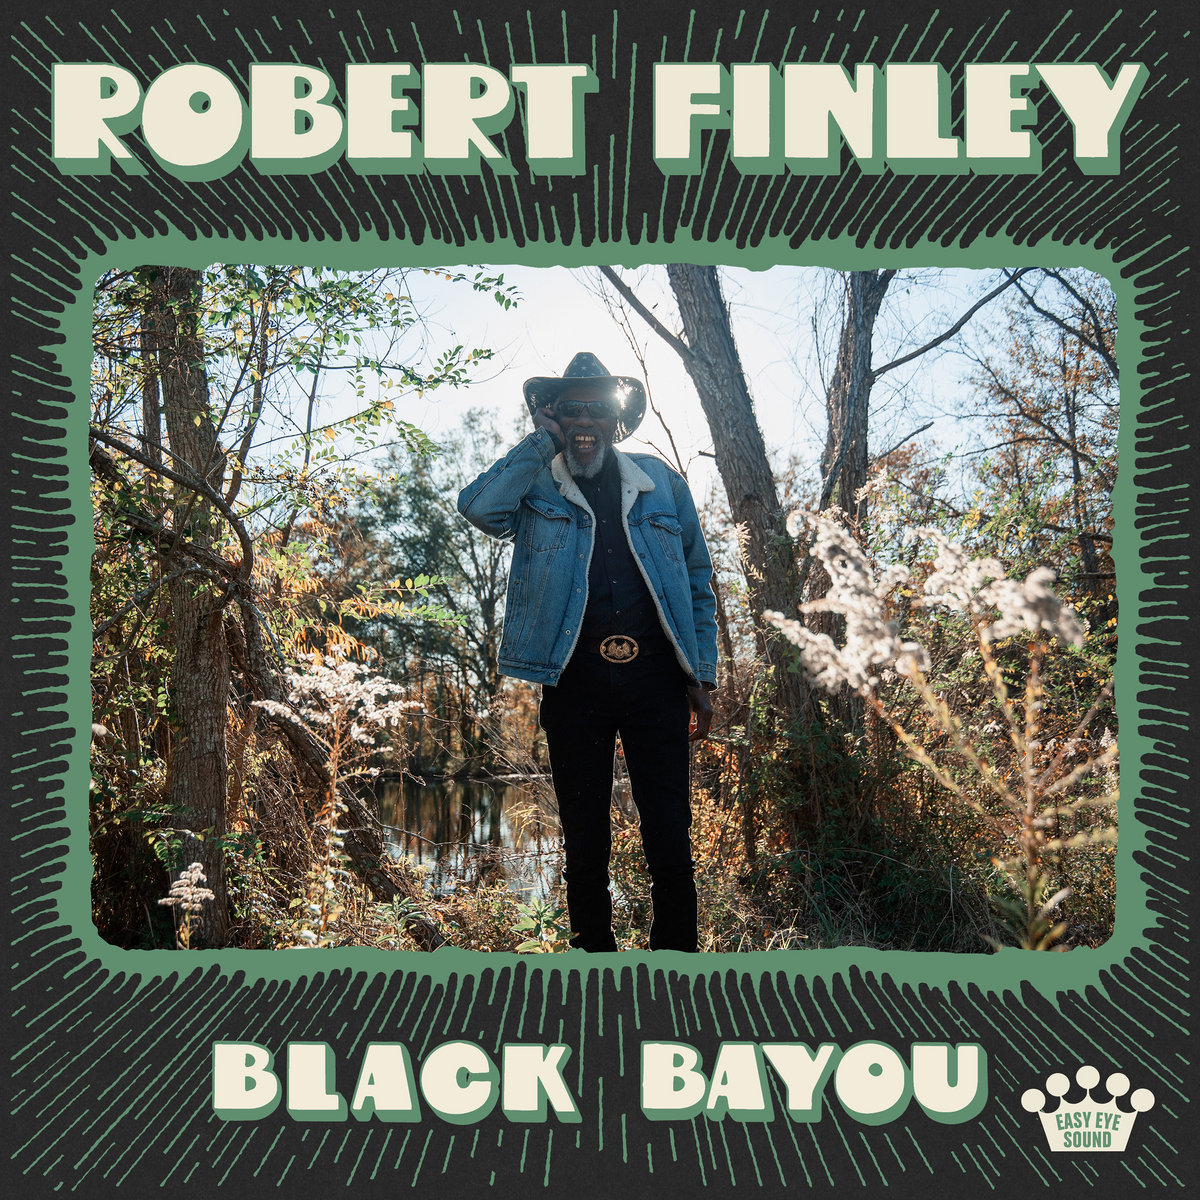 Robert Finley – Black Bayou (cover art)